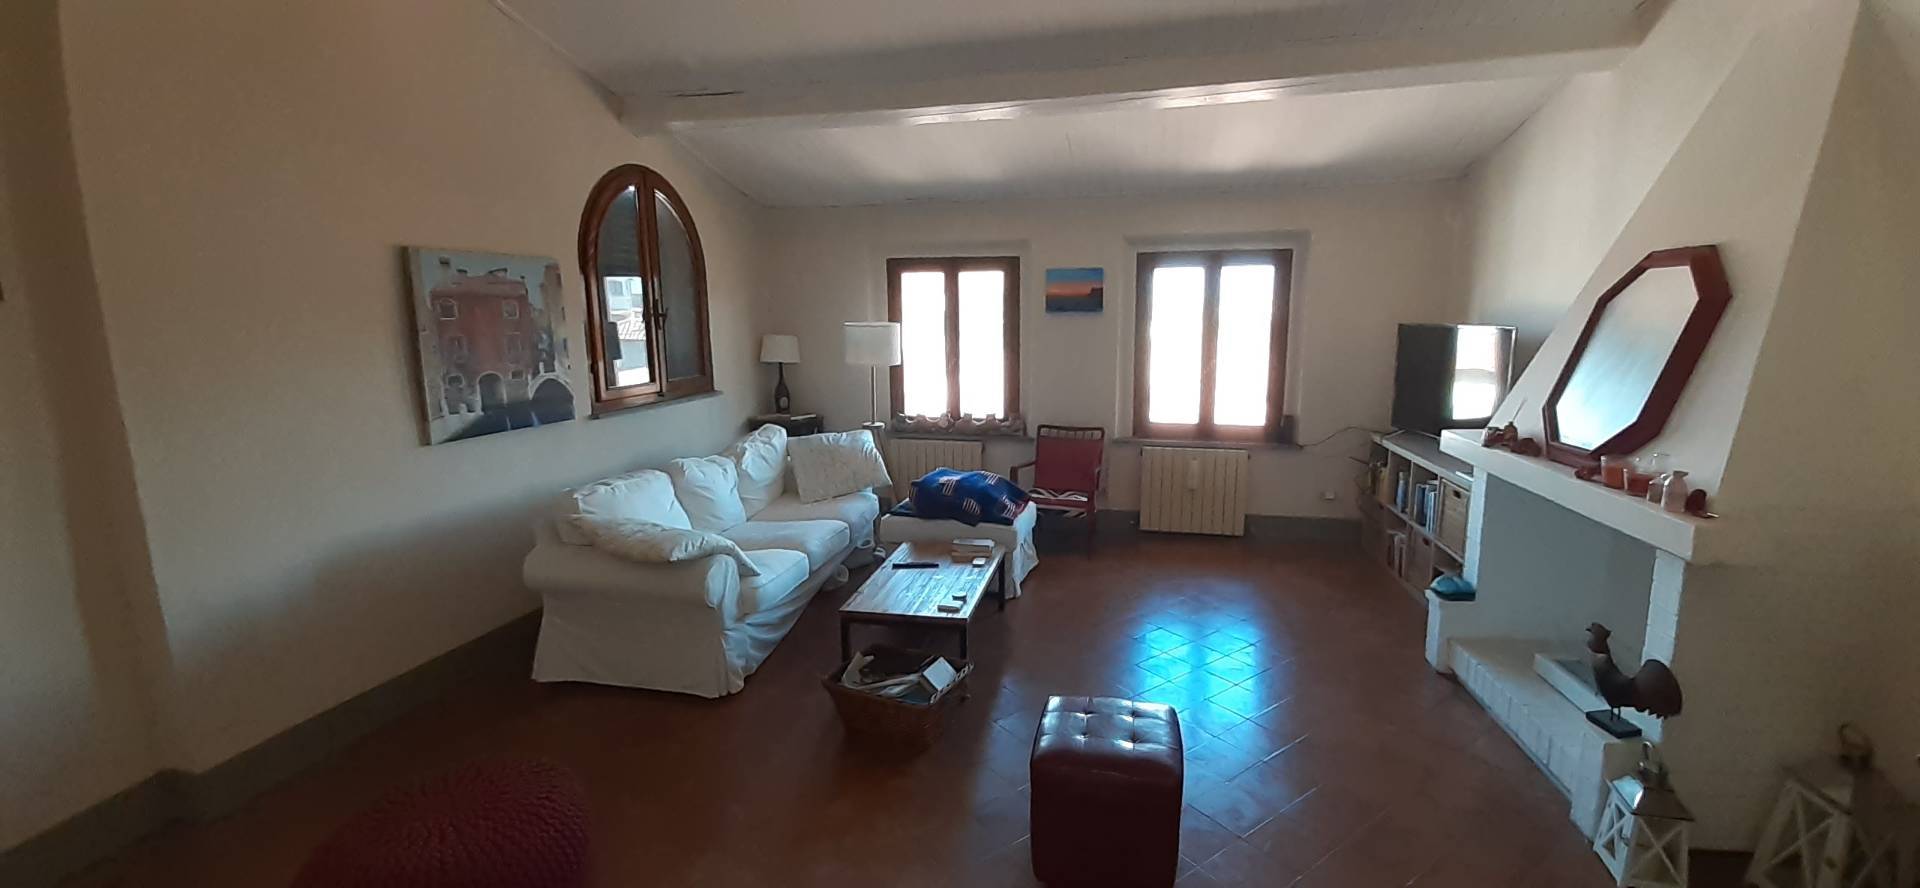 Appartamento in vendita - Santa Maria, Pisa